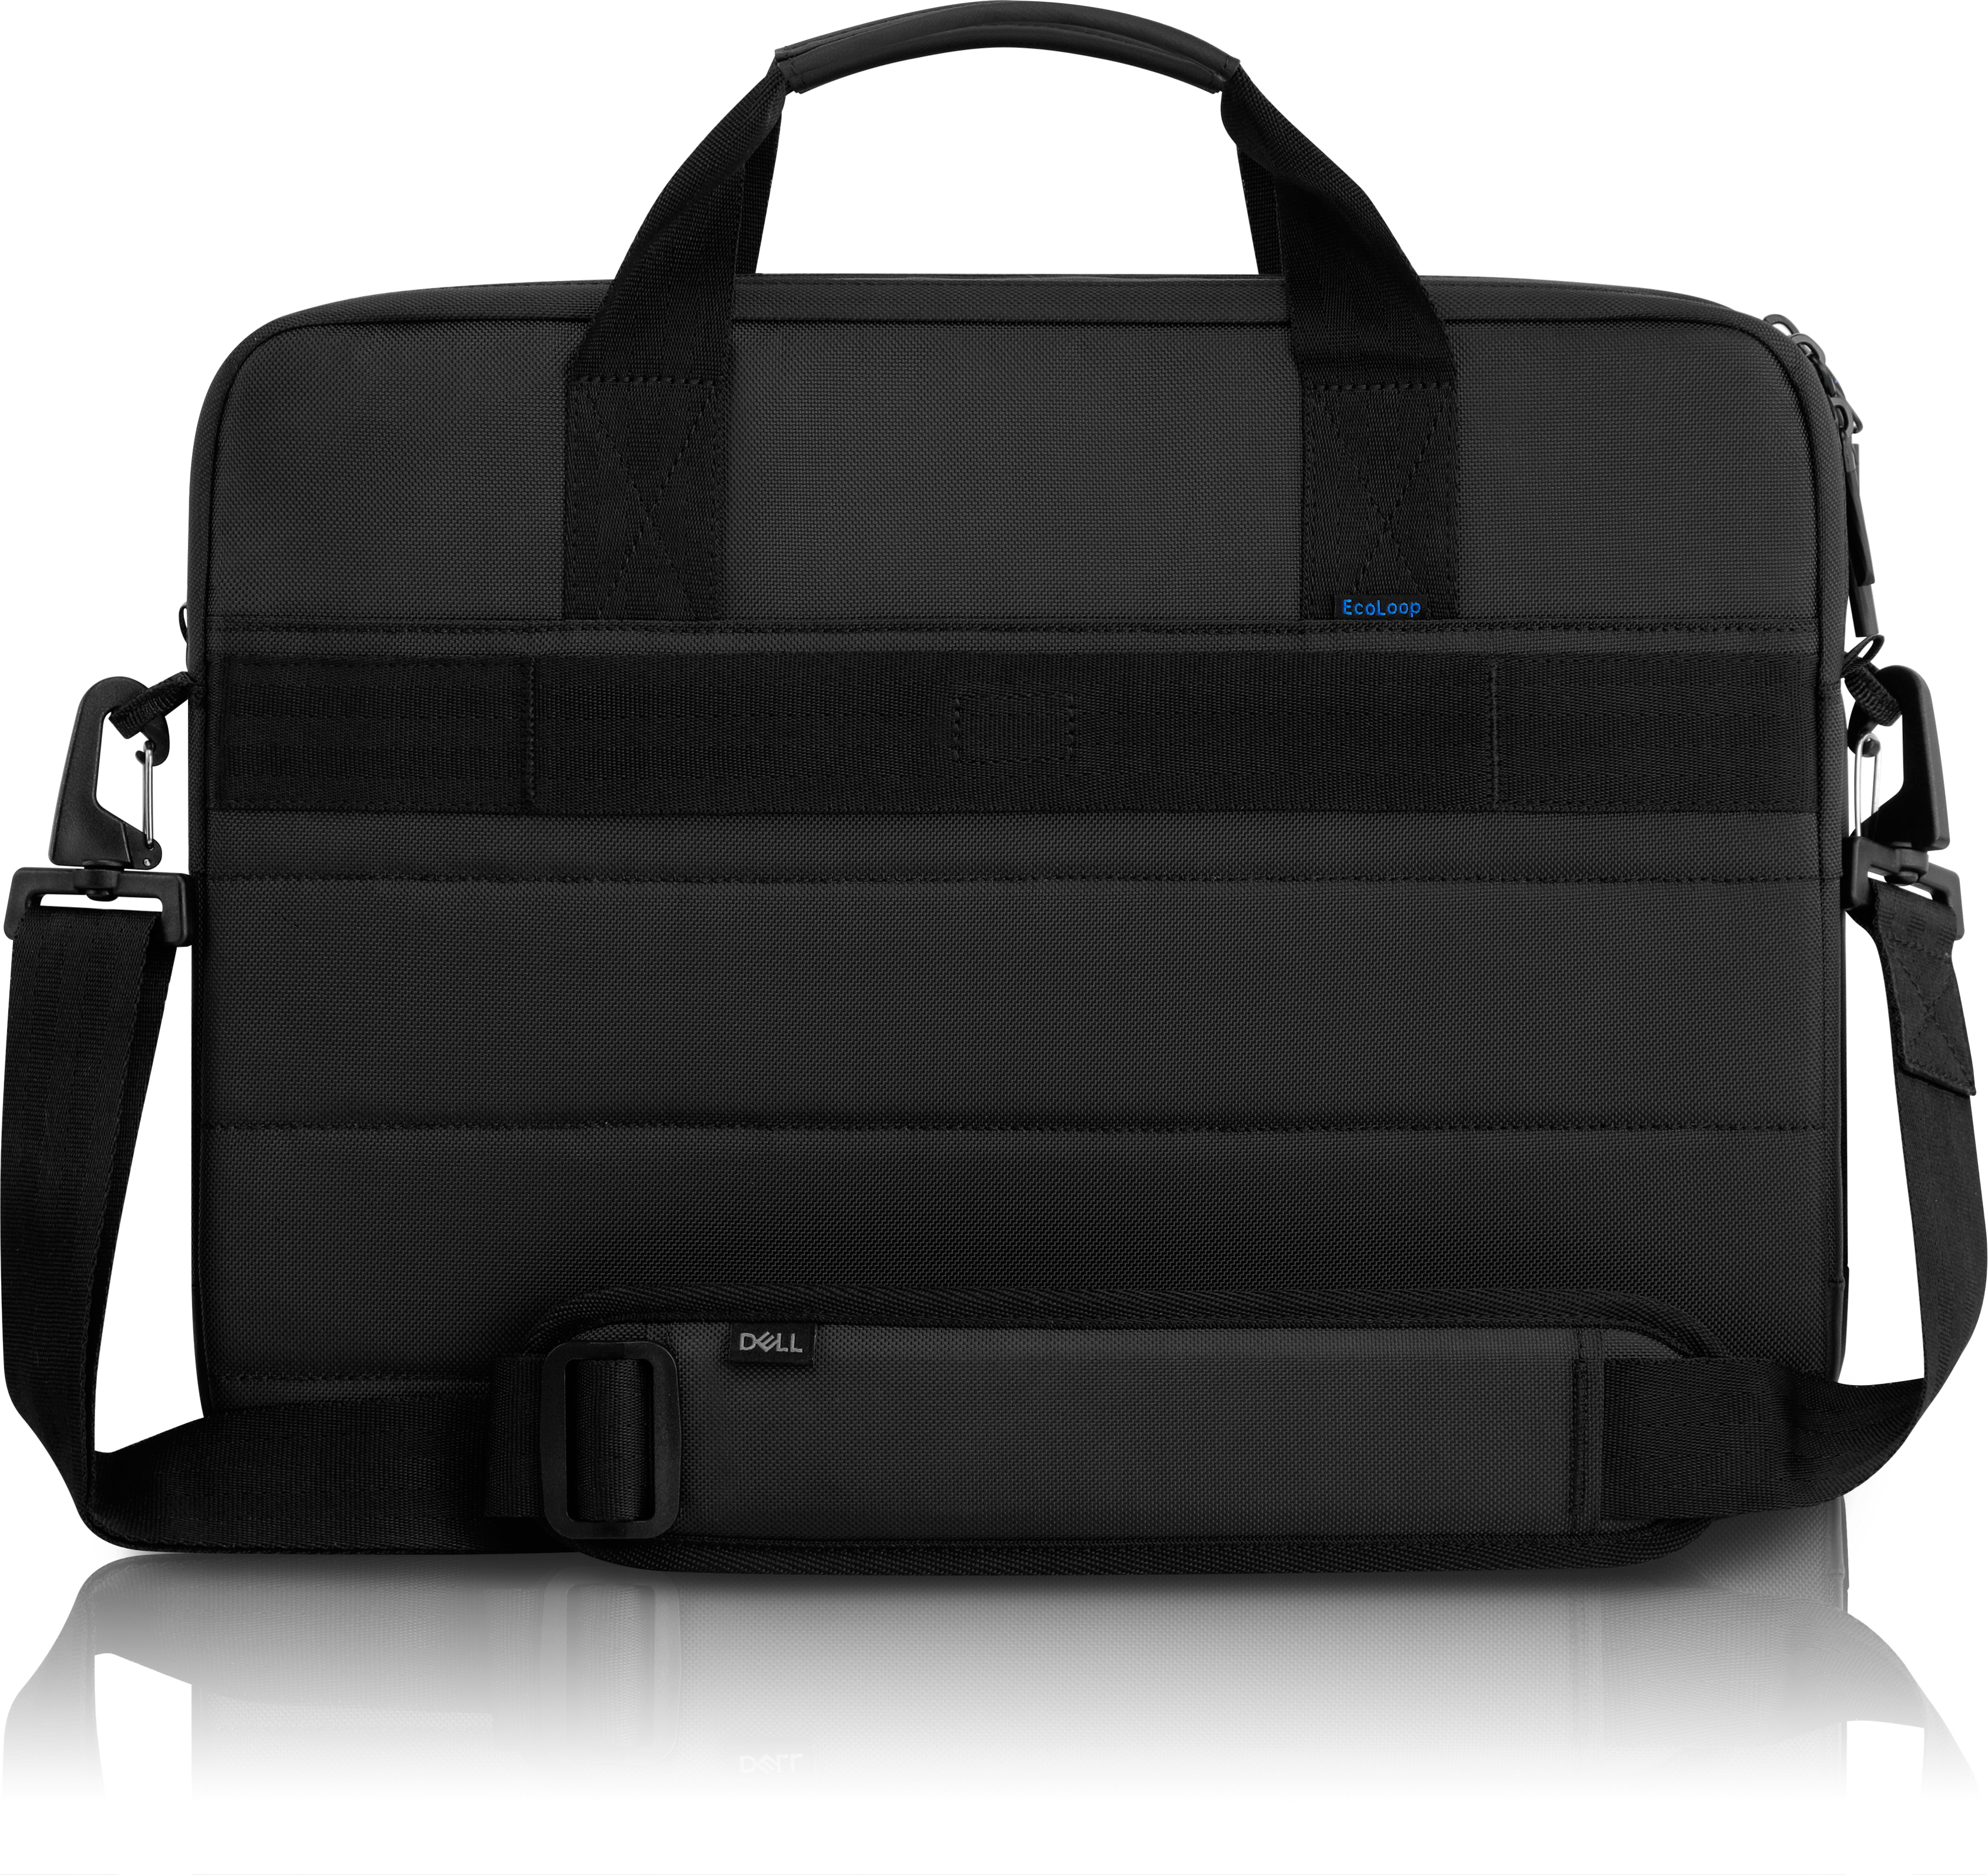 Dell EcoLoop Pro Briefcase 15 | Dell USA